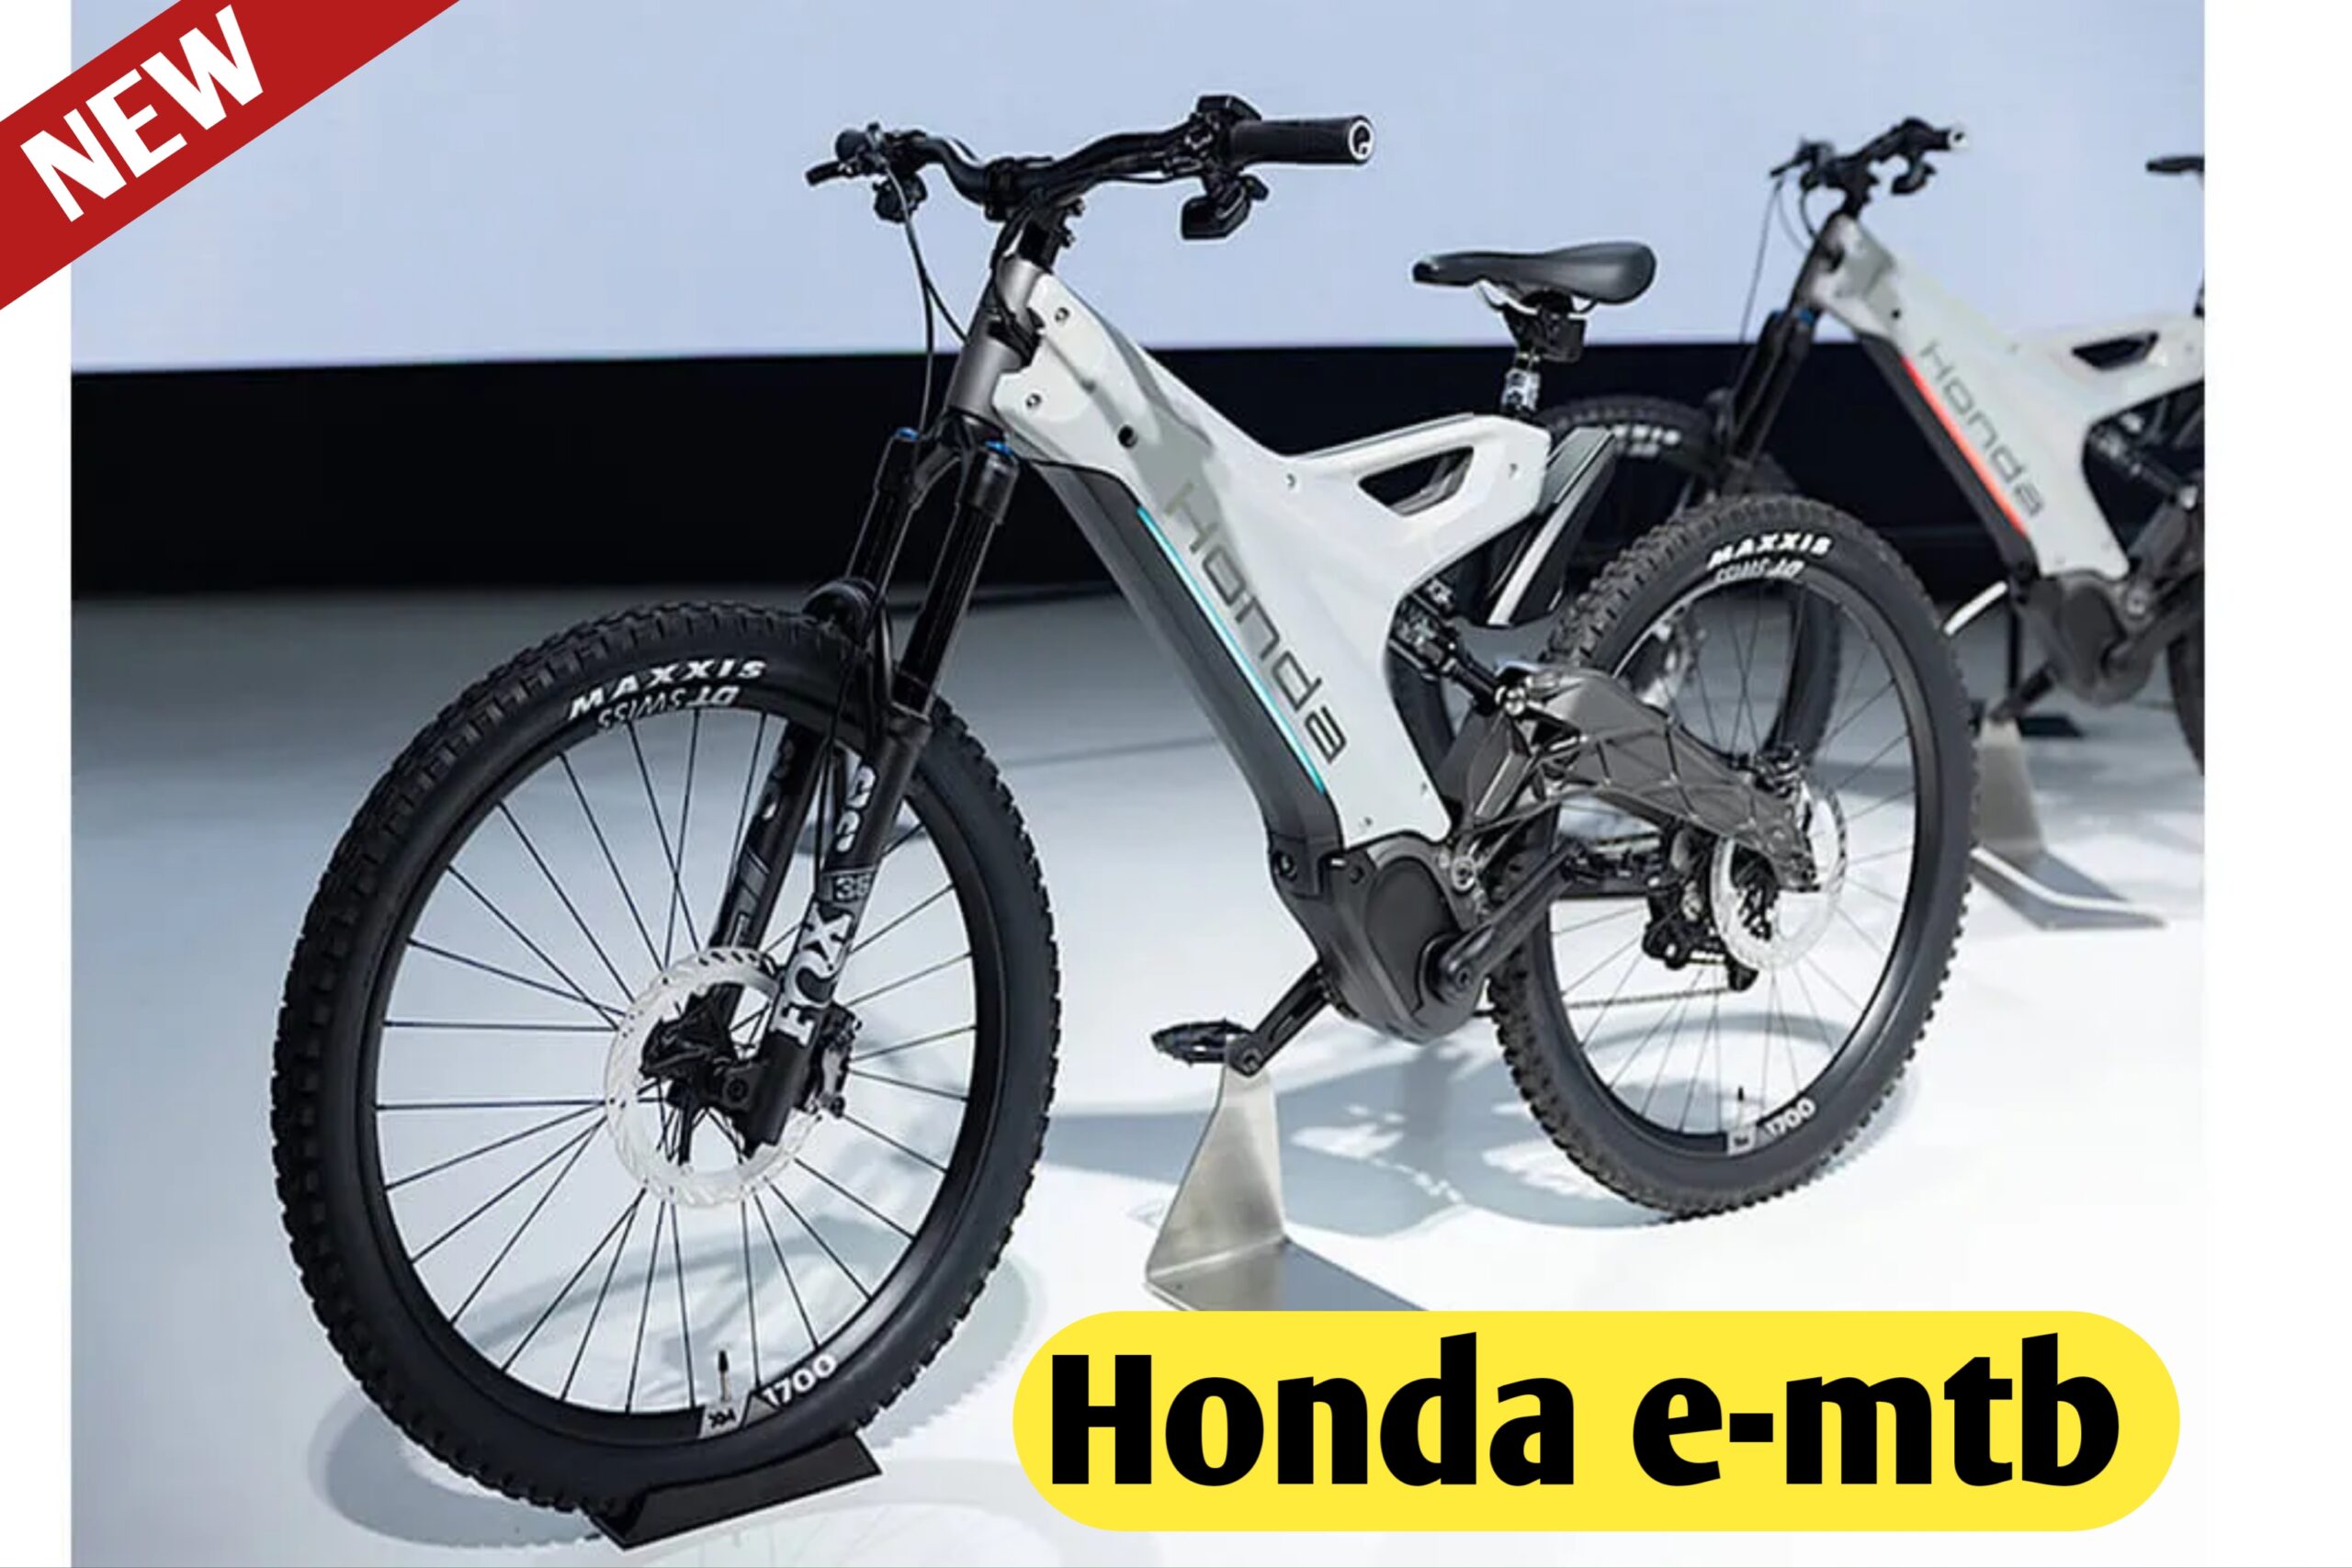 Honda e-mtb electric cycle